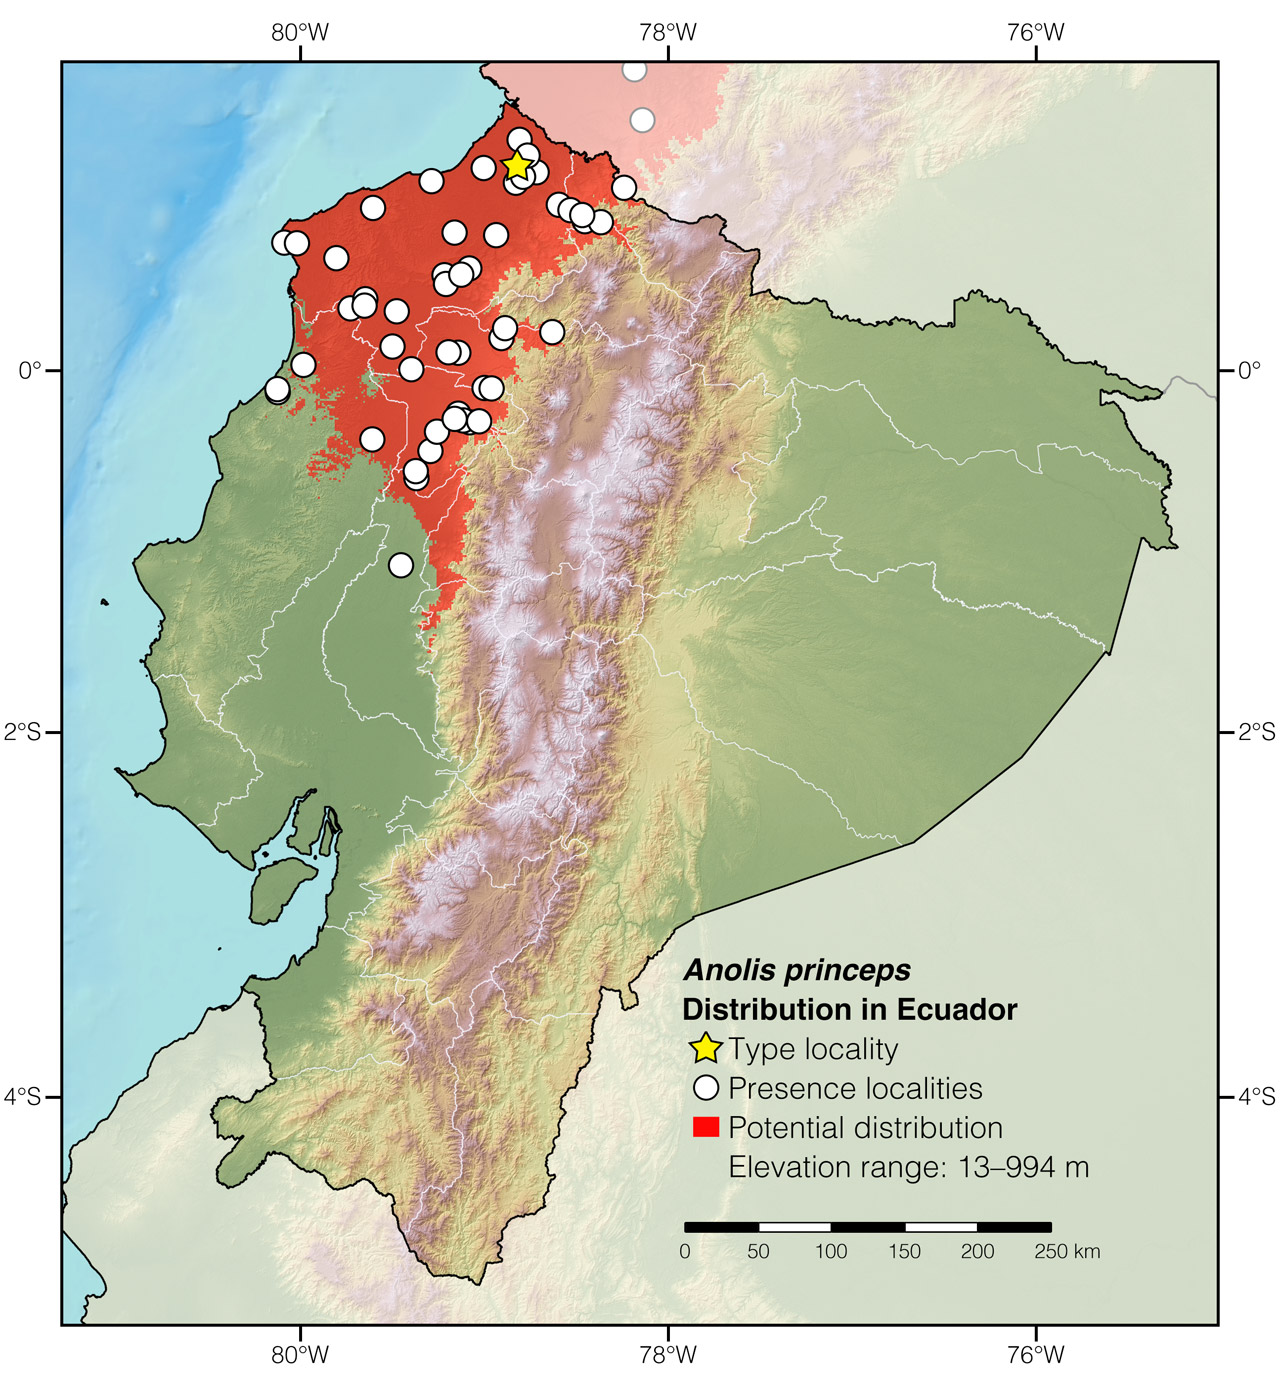 Distribution of Anolis princeps in Ecuador